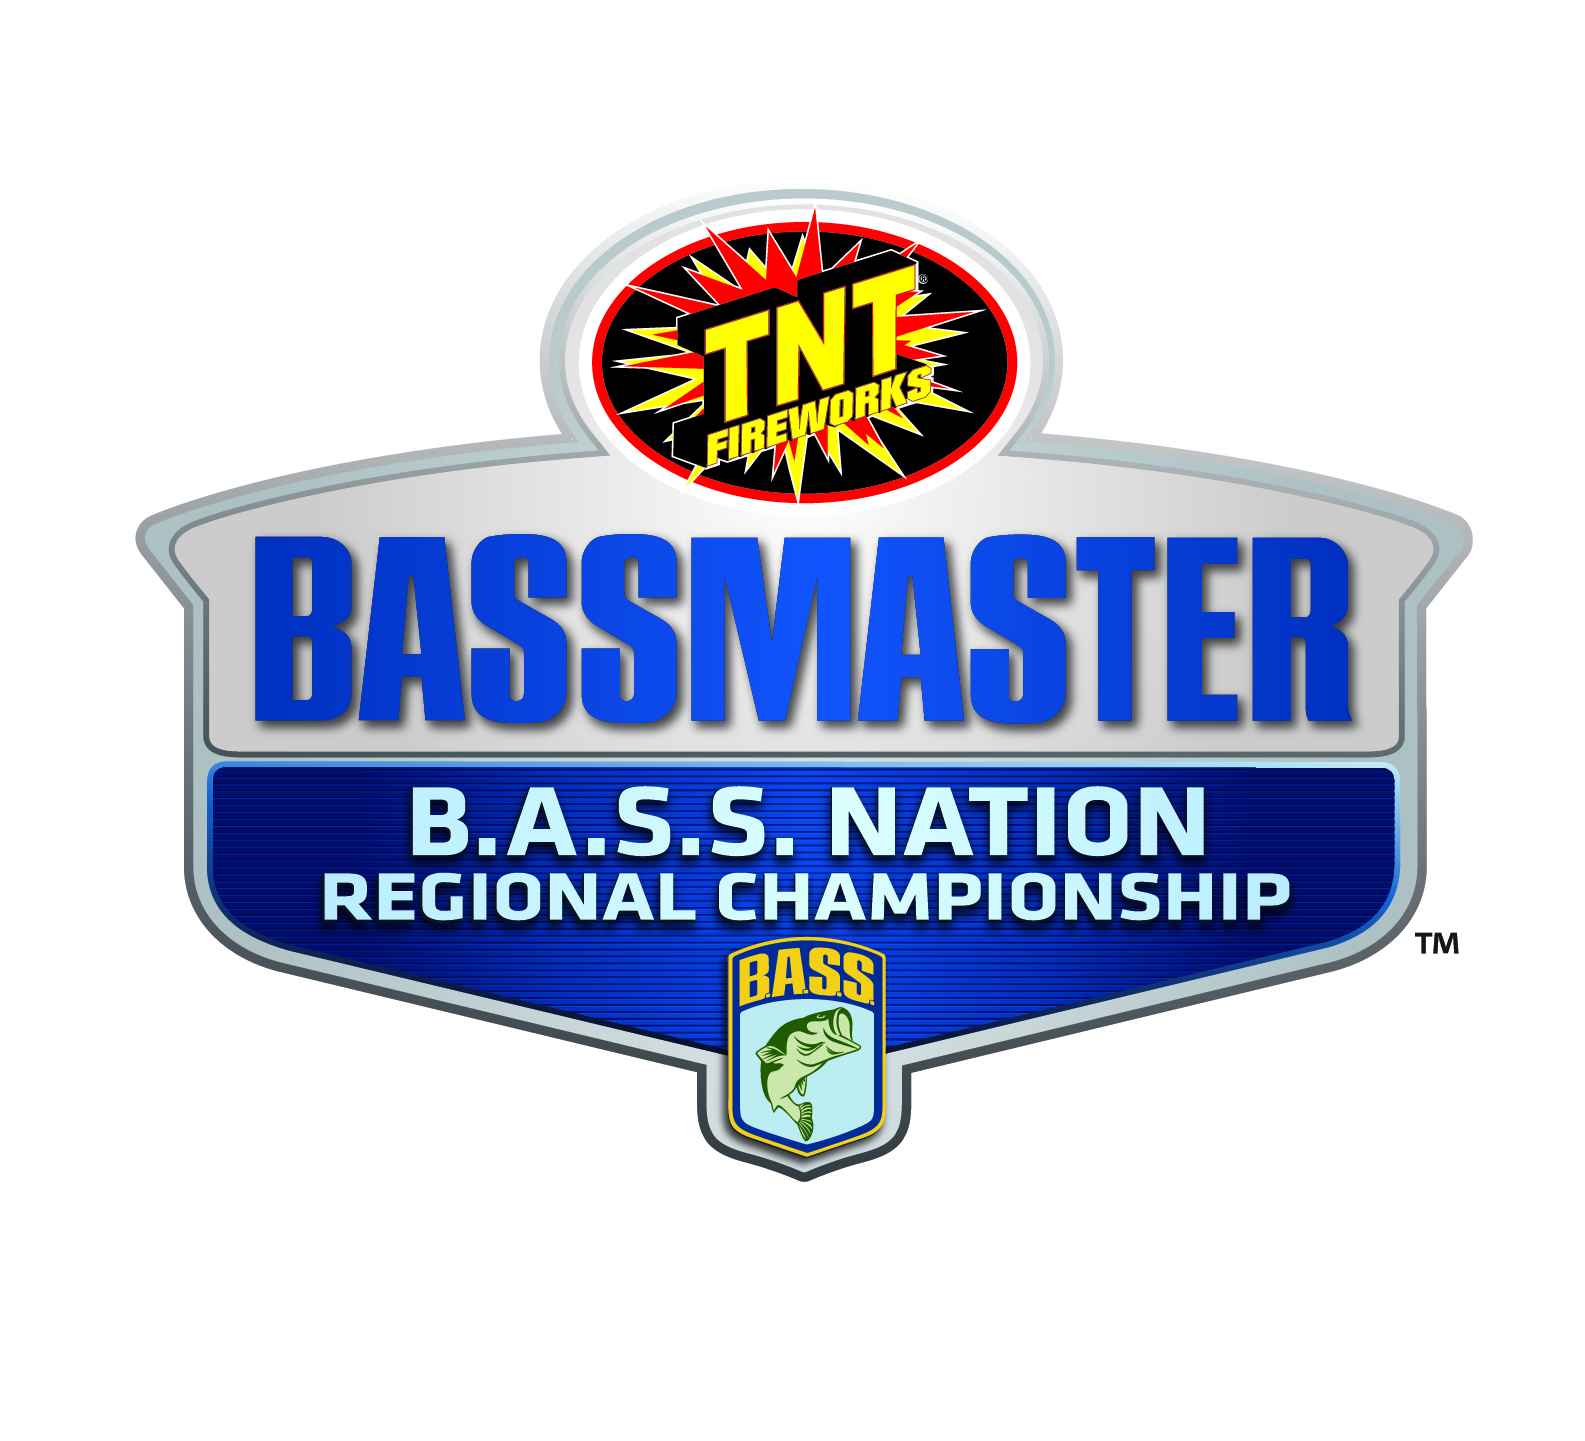 2020 Northeast Regional Champ logo5